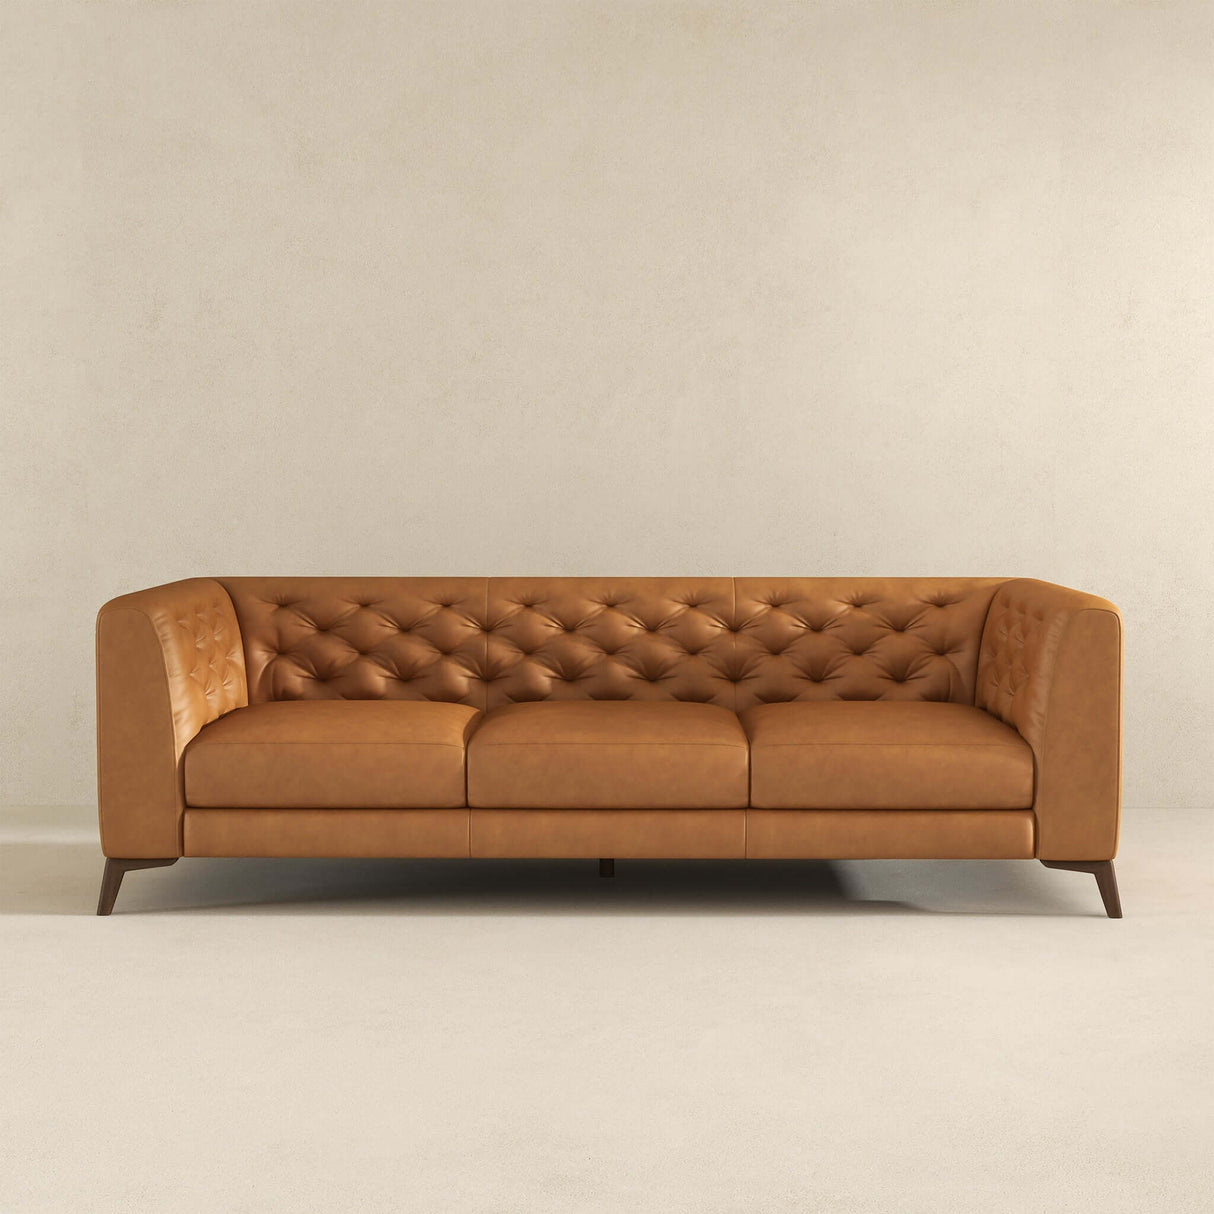 Carter Mid-Century Modern Tufted Tight Back Genuine Leather Sofa - AFC00039 - Luna Furniture